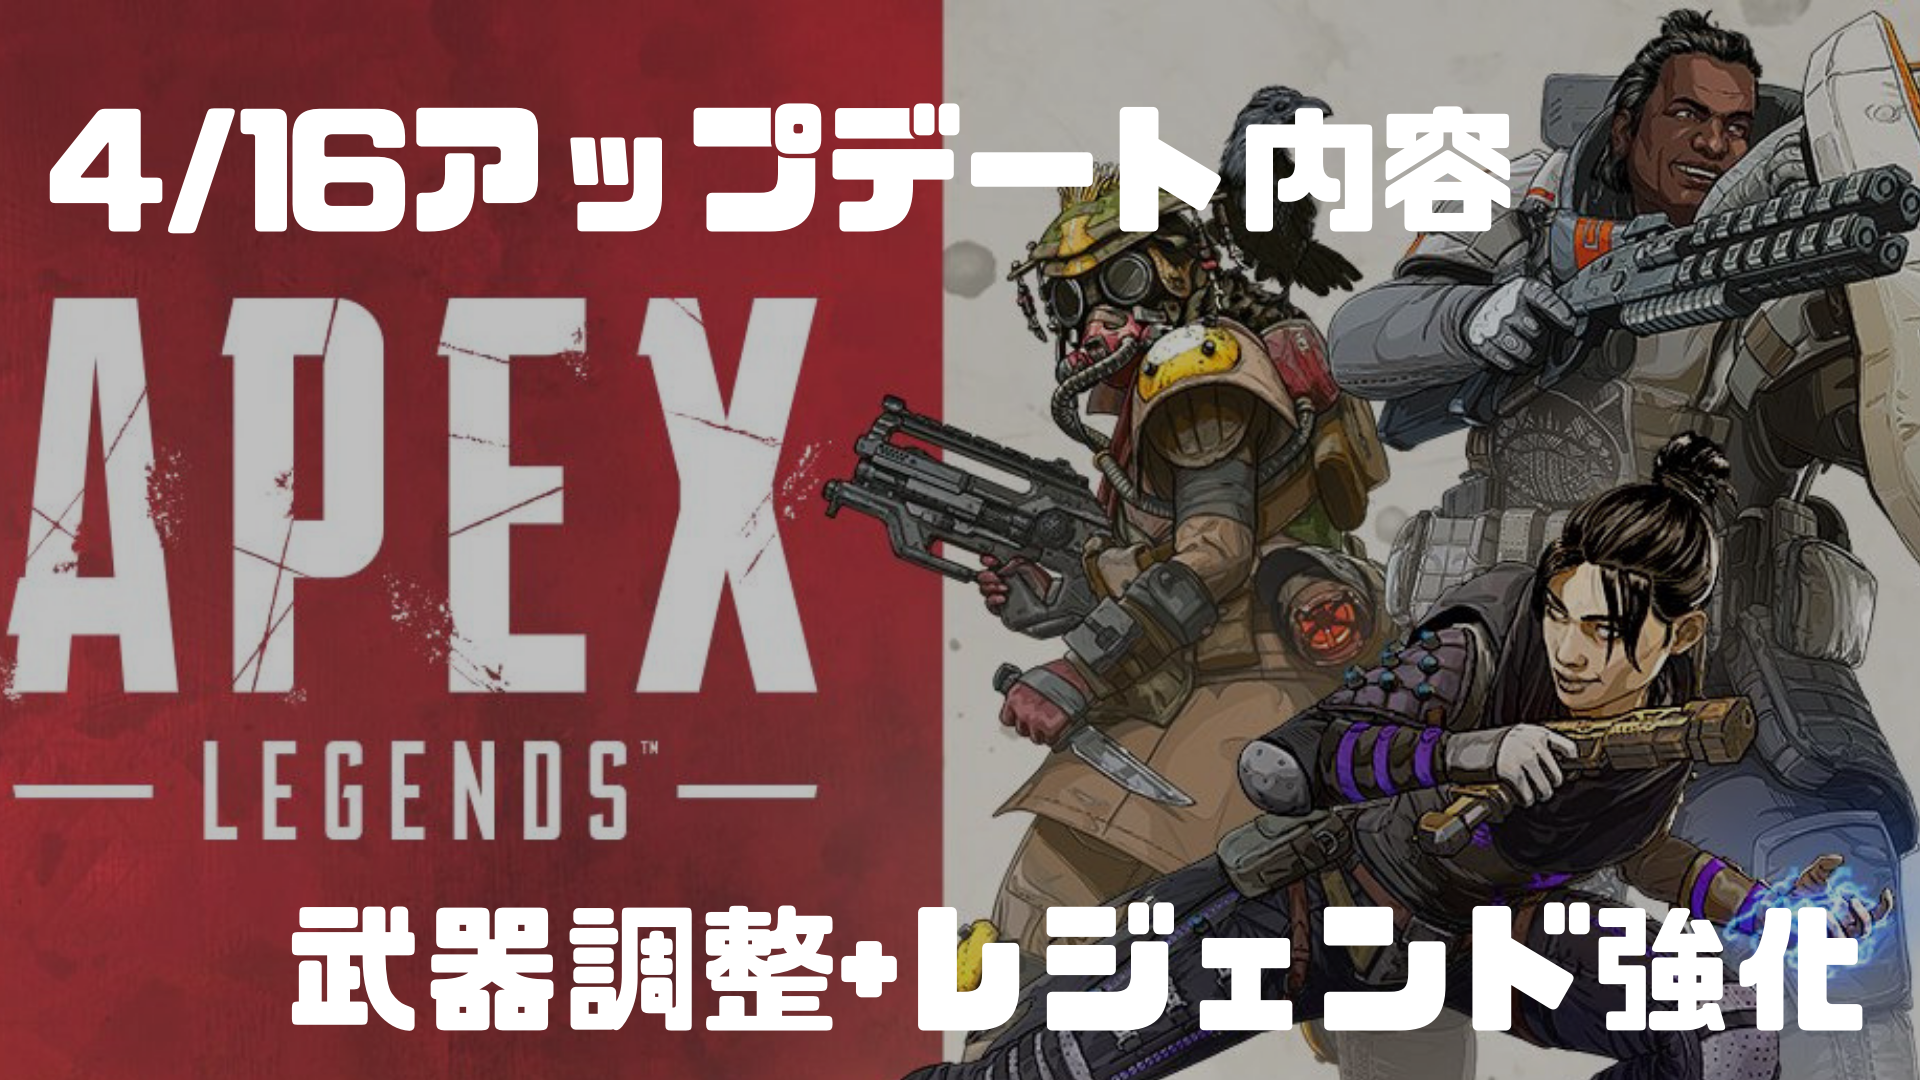 PS4版Apex Legends 武器調整などのアプデ内容 4/16